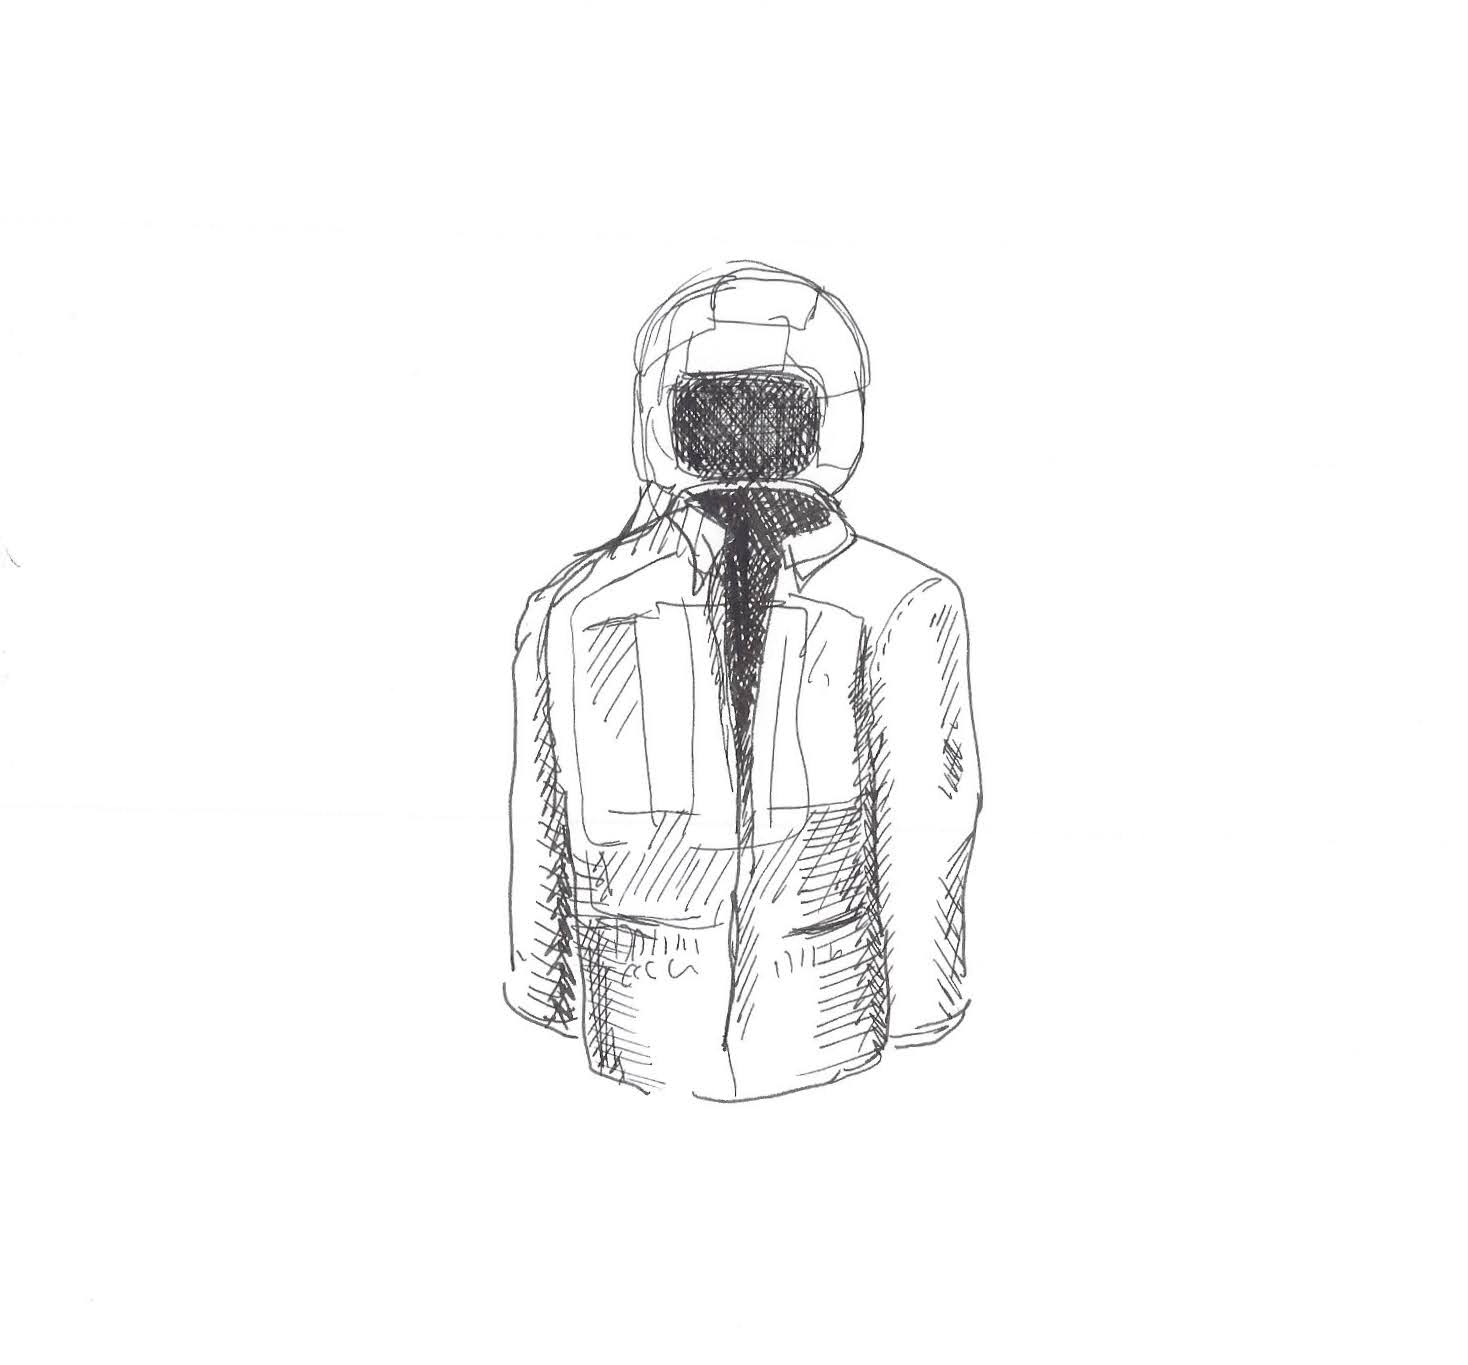 Atelier Van Lieshout - Improvised Armour Jacket, 2020